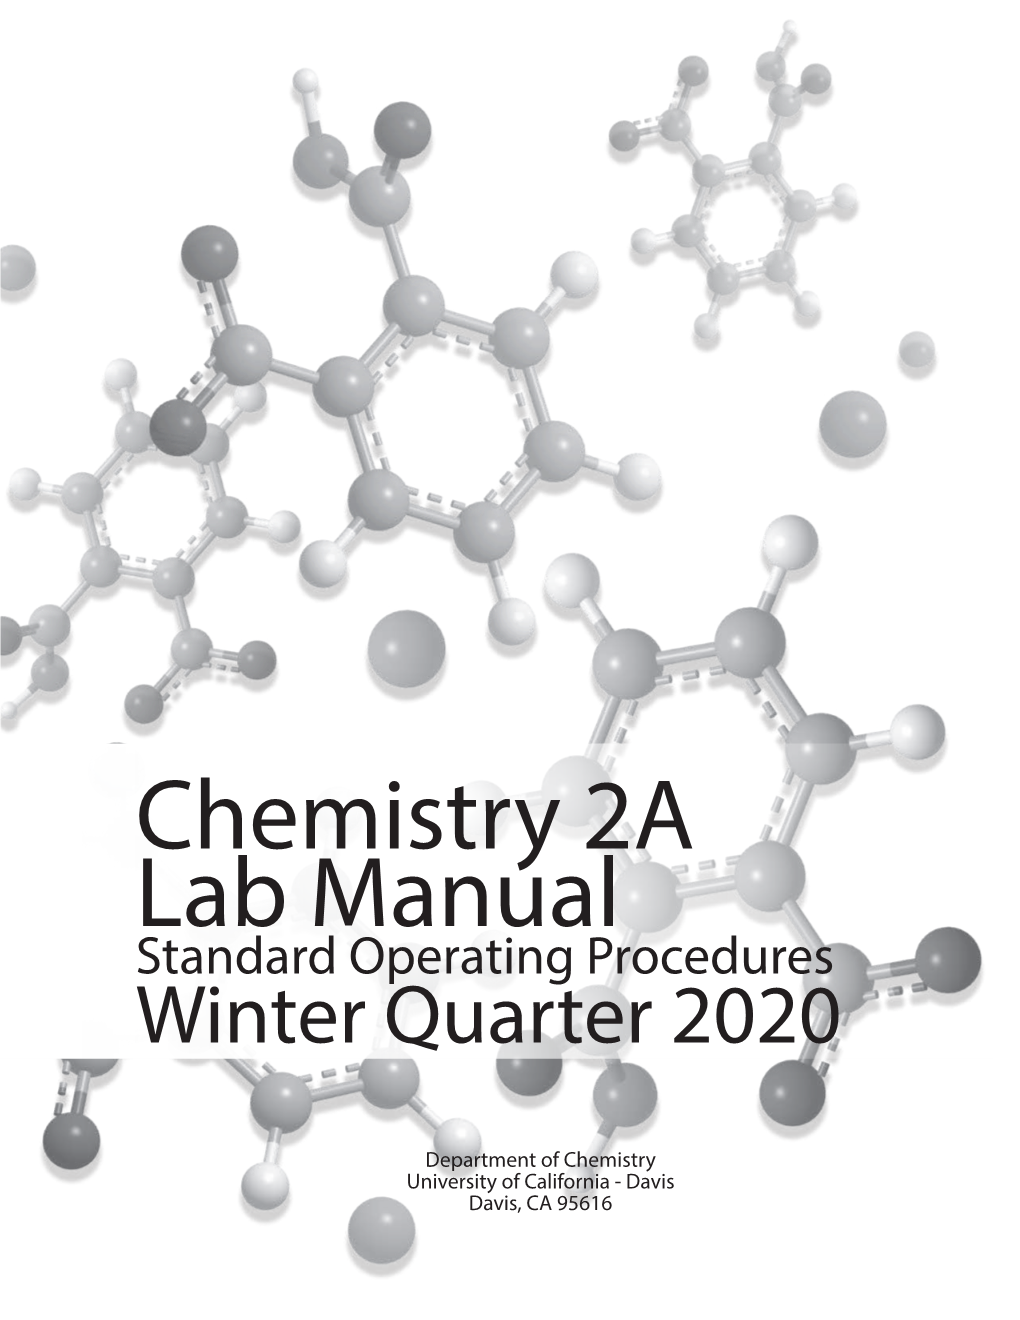 Chemistry 2A Lab Manual Standard Operating Procedures Winter Quarter 2020